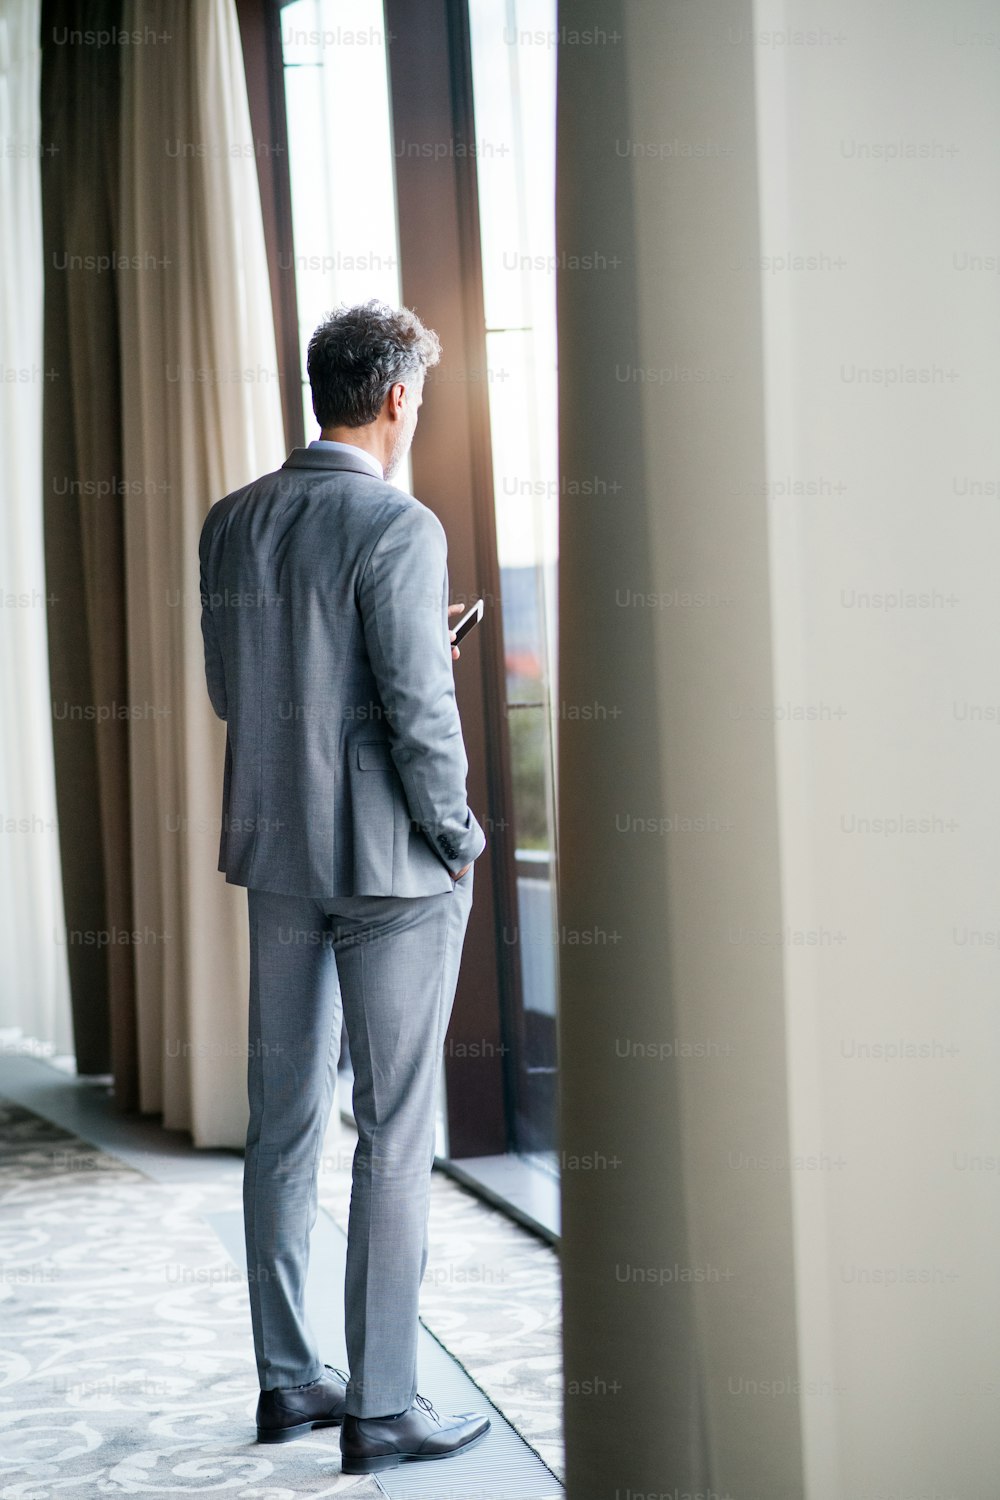 500+ Men Suit Pictures [Hd] | Download Free Images On Unsplash